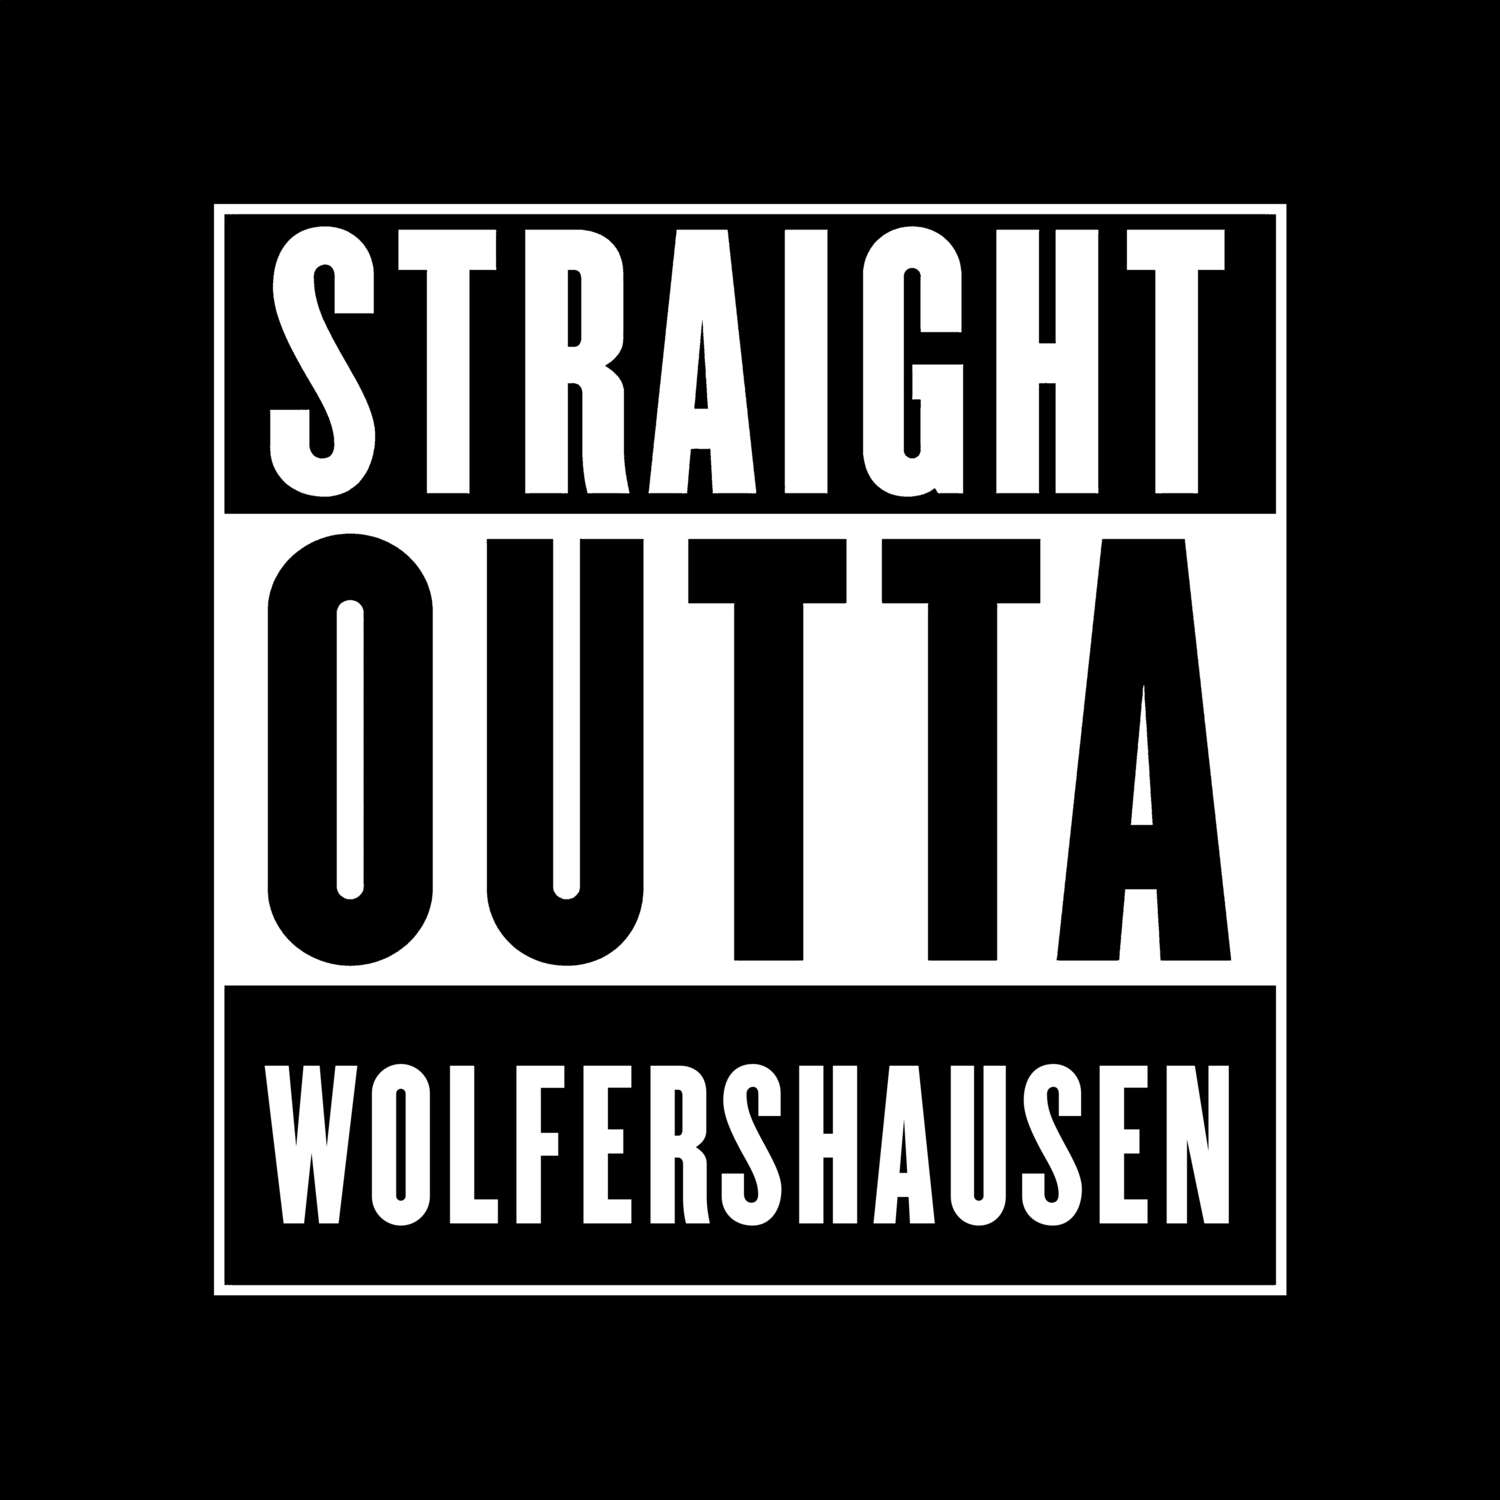 Wolfershausen T-Shirt »Straight Outta«